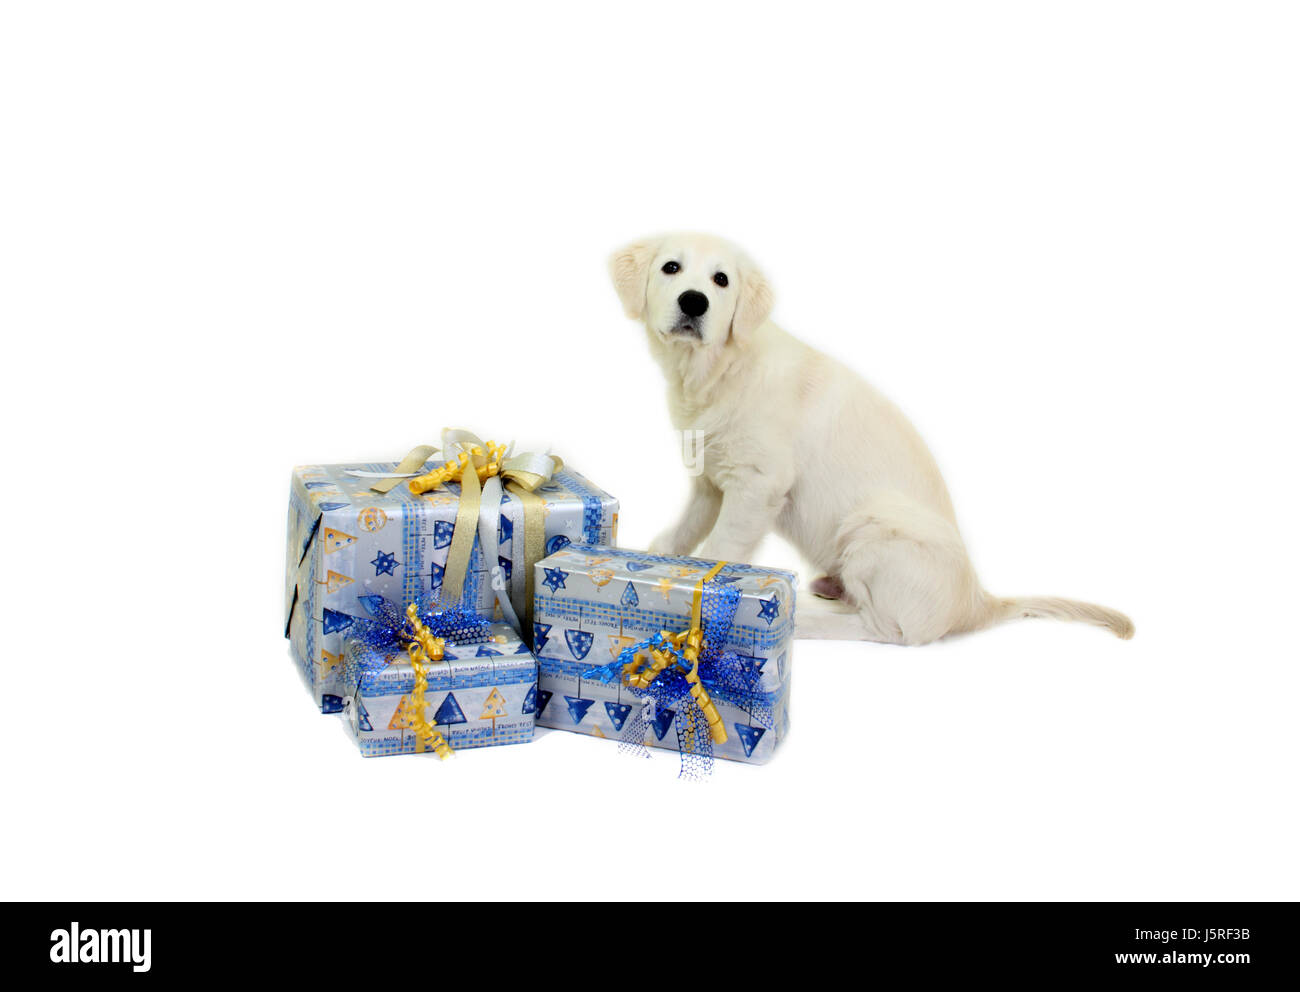 Exclusive Deal White Golden Retriever Puppy Gift Box Present